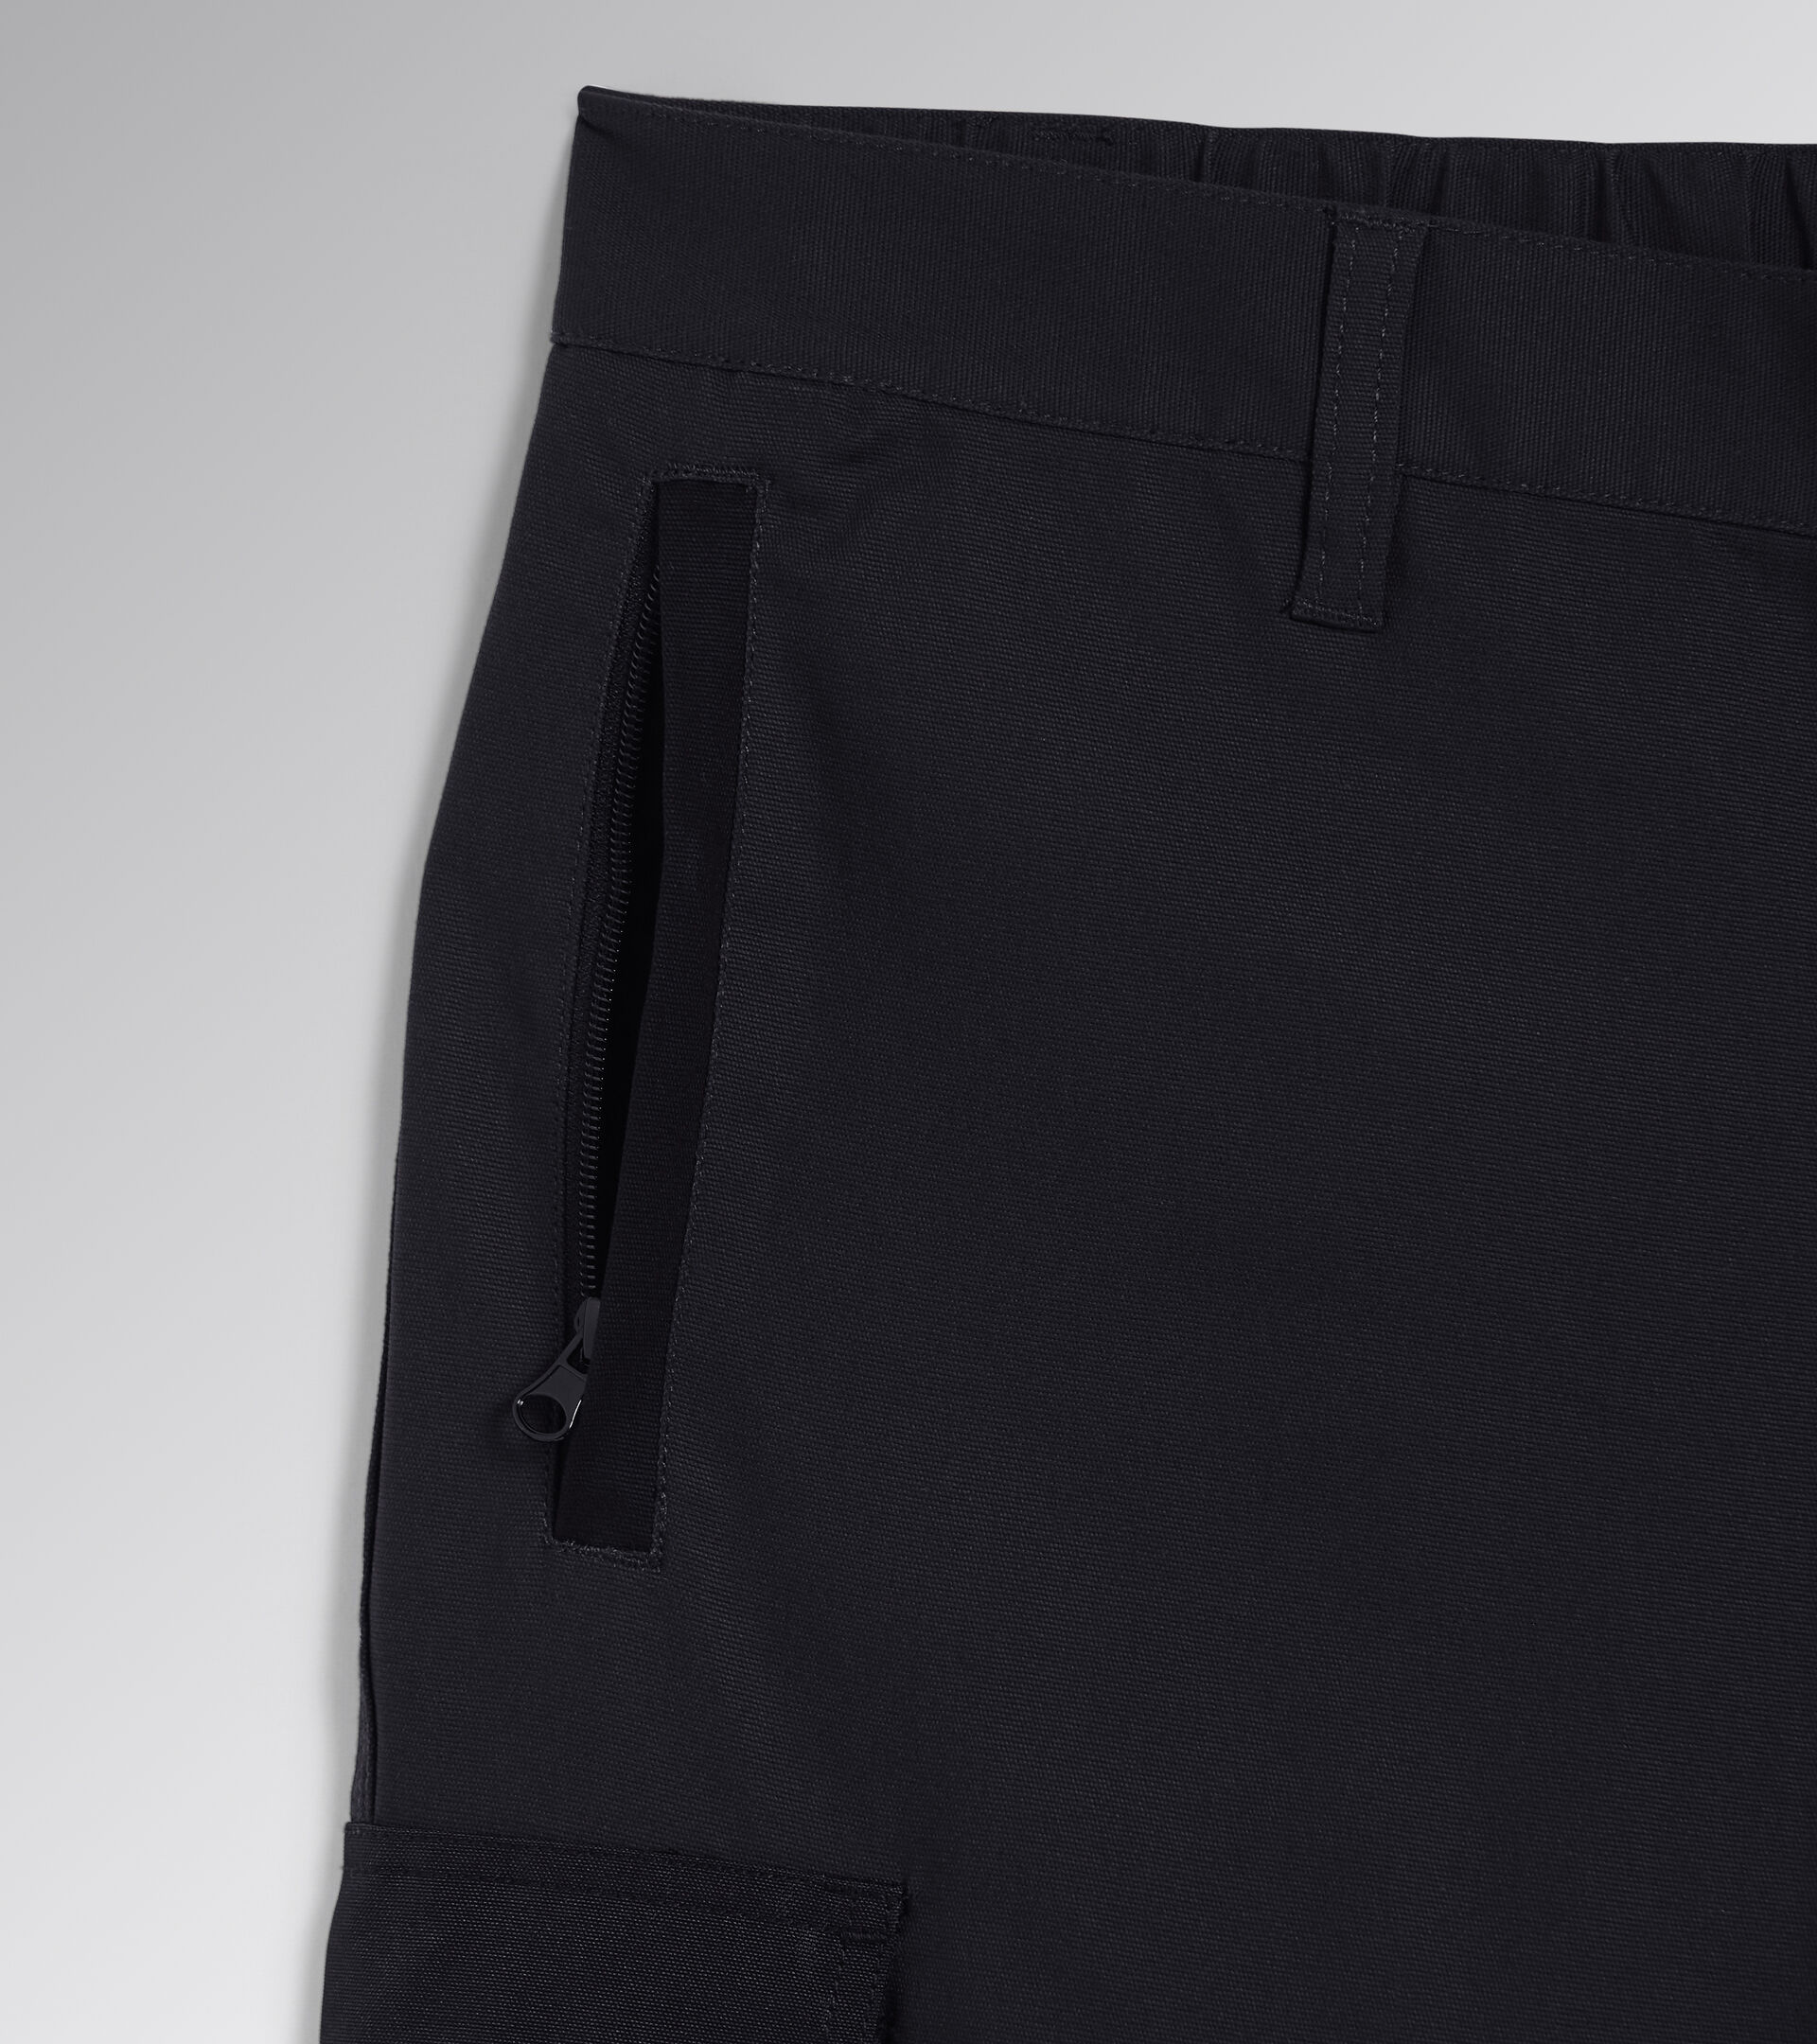 PANT STRETCH CARGO Work trousers - Diadora Utility Online Store CA